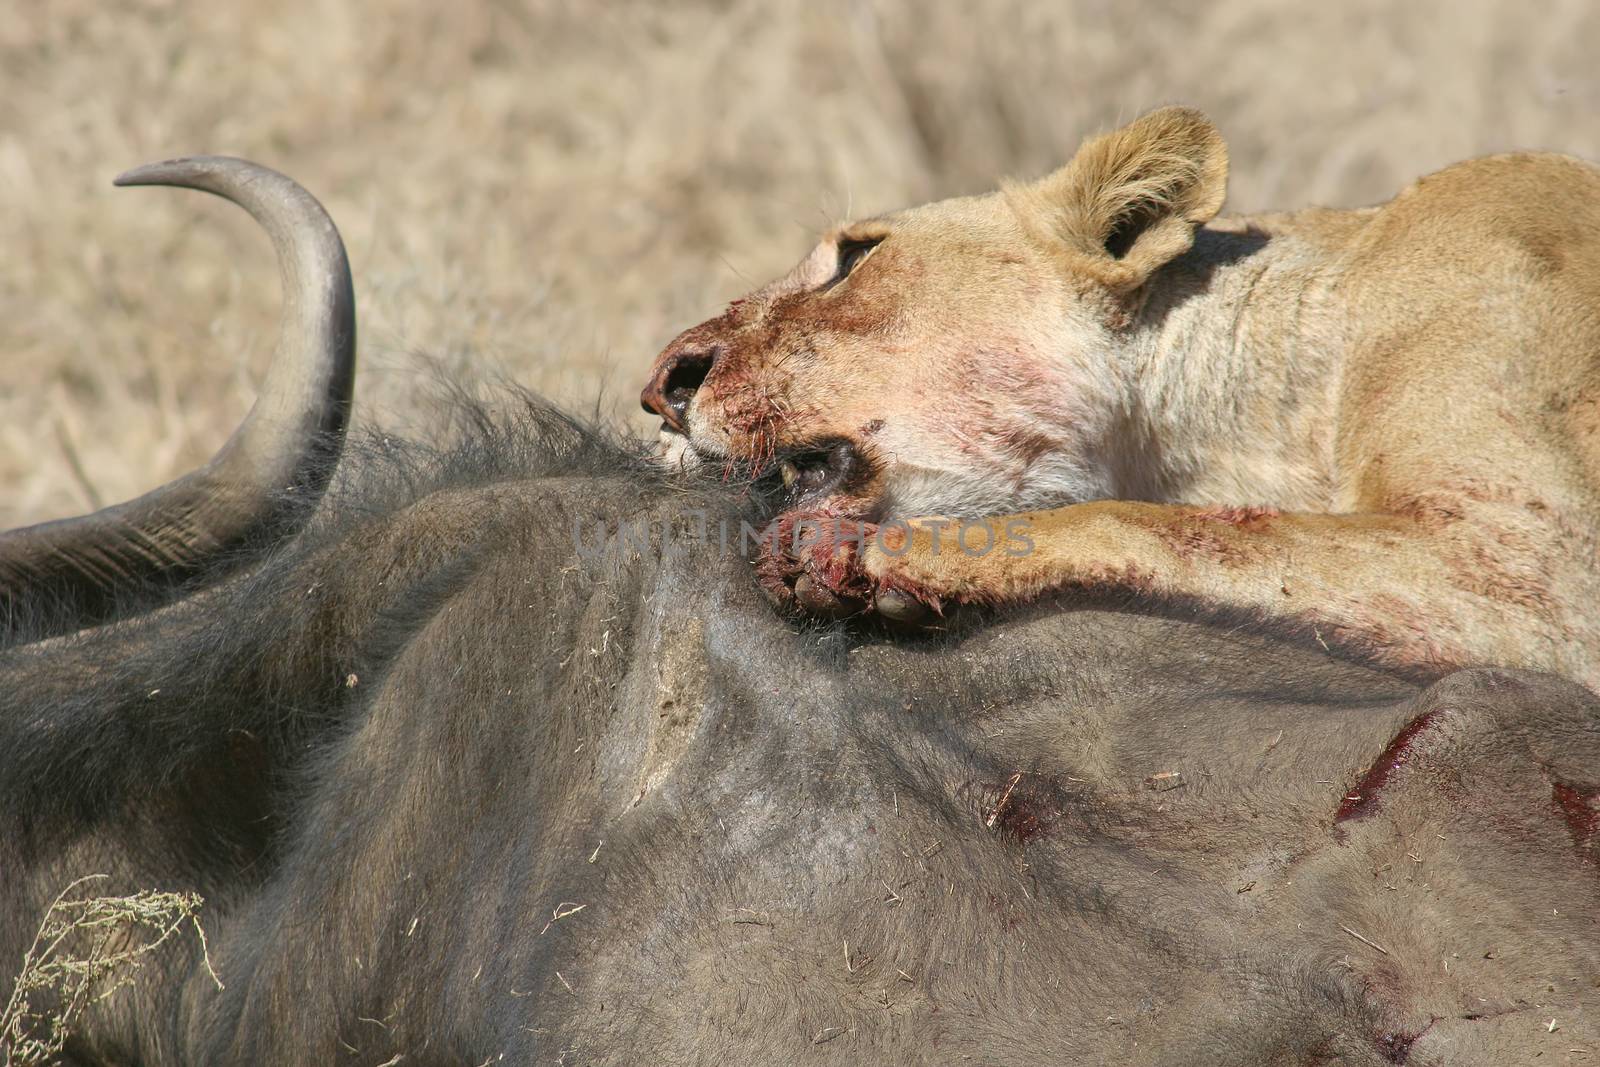 lion eating bull in blood after hunting wild dangerous mammal africa savannah Kenya by desant7474